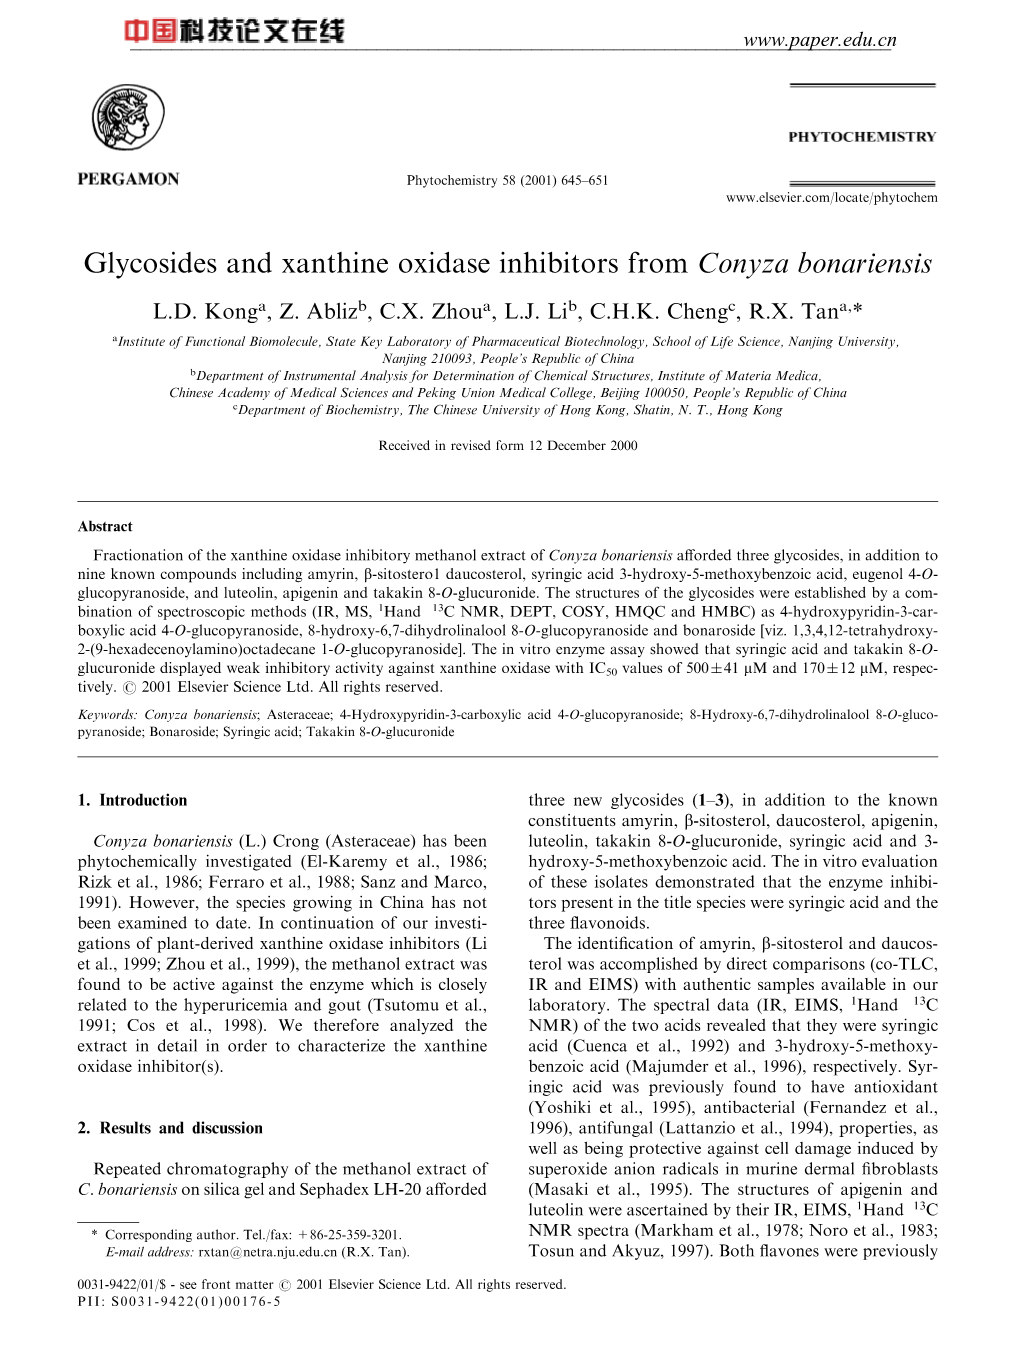 Glycosides and Xanthine Oxidase Inhibitors from Conyza Bonariensis